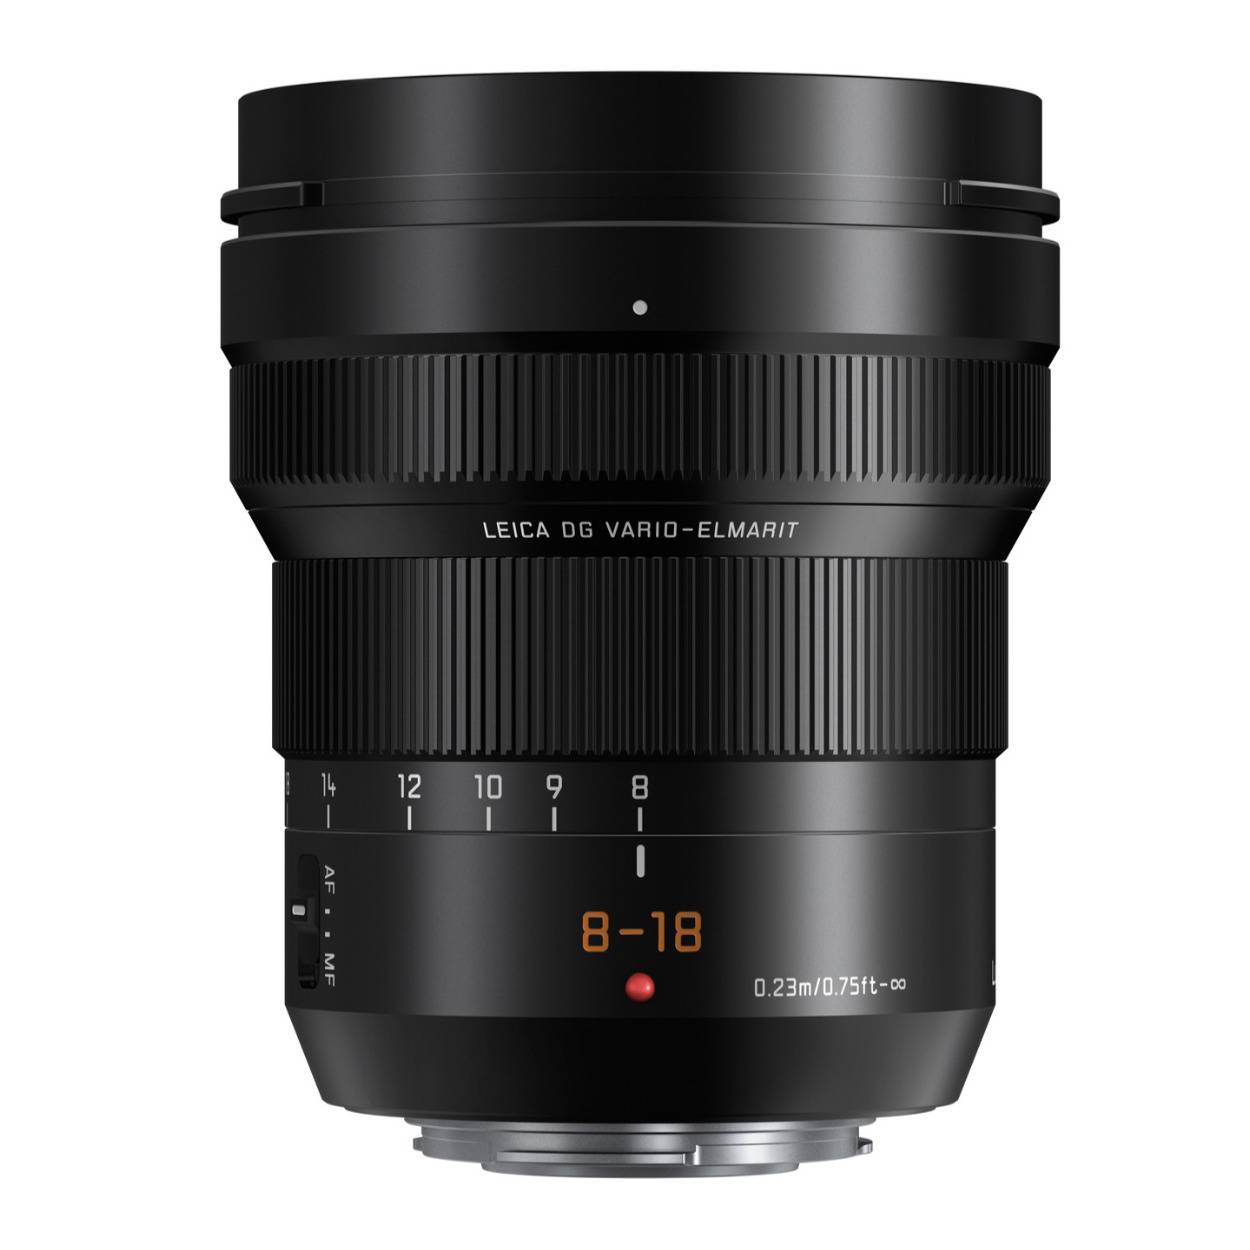 Panasonic LUMIX G Leica DG Vario-Elmarit 8-18mm f/2.8-4.0 Professional MFT Lens